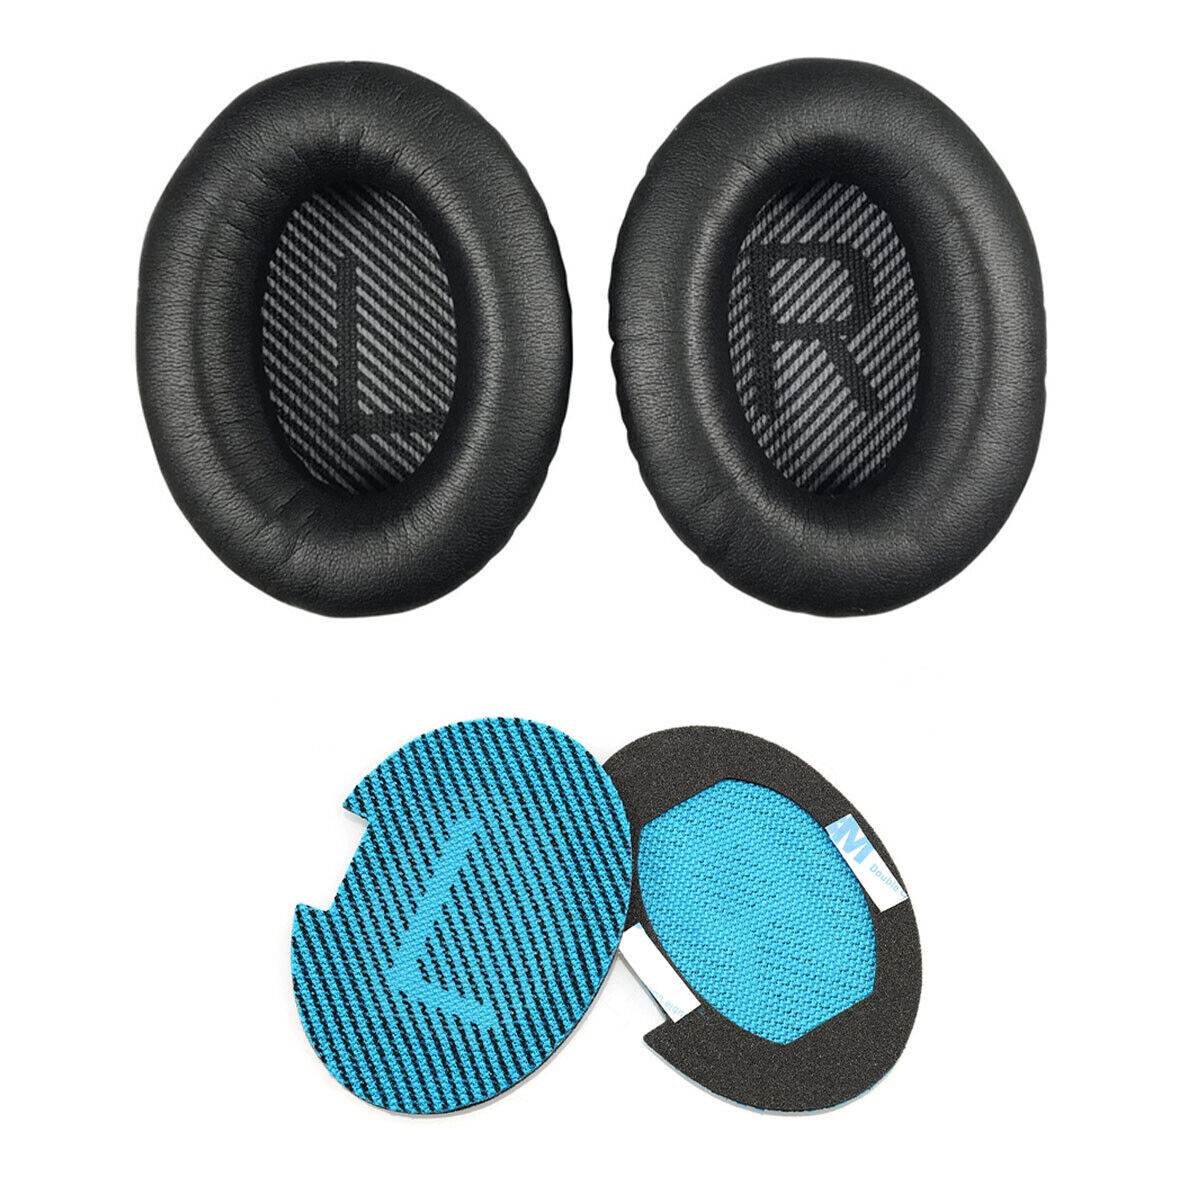 Replacement Cushions Ear Pads for Bose QuietComfort QC15 QC25 QC35 AE2 AE2i AE2w